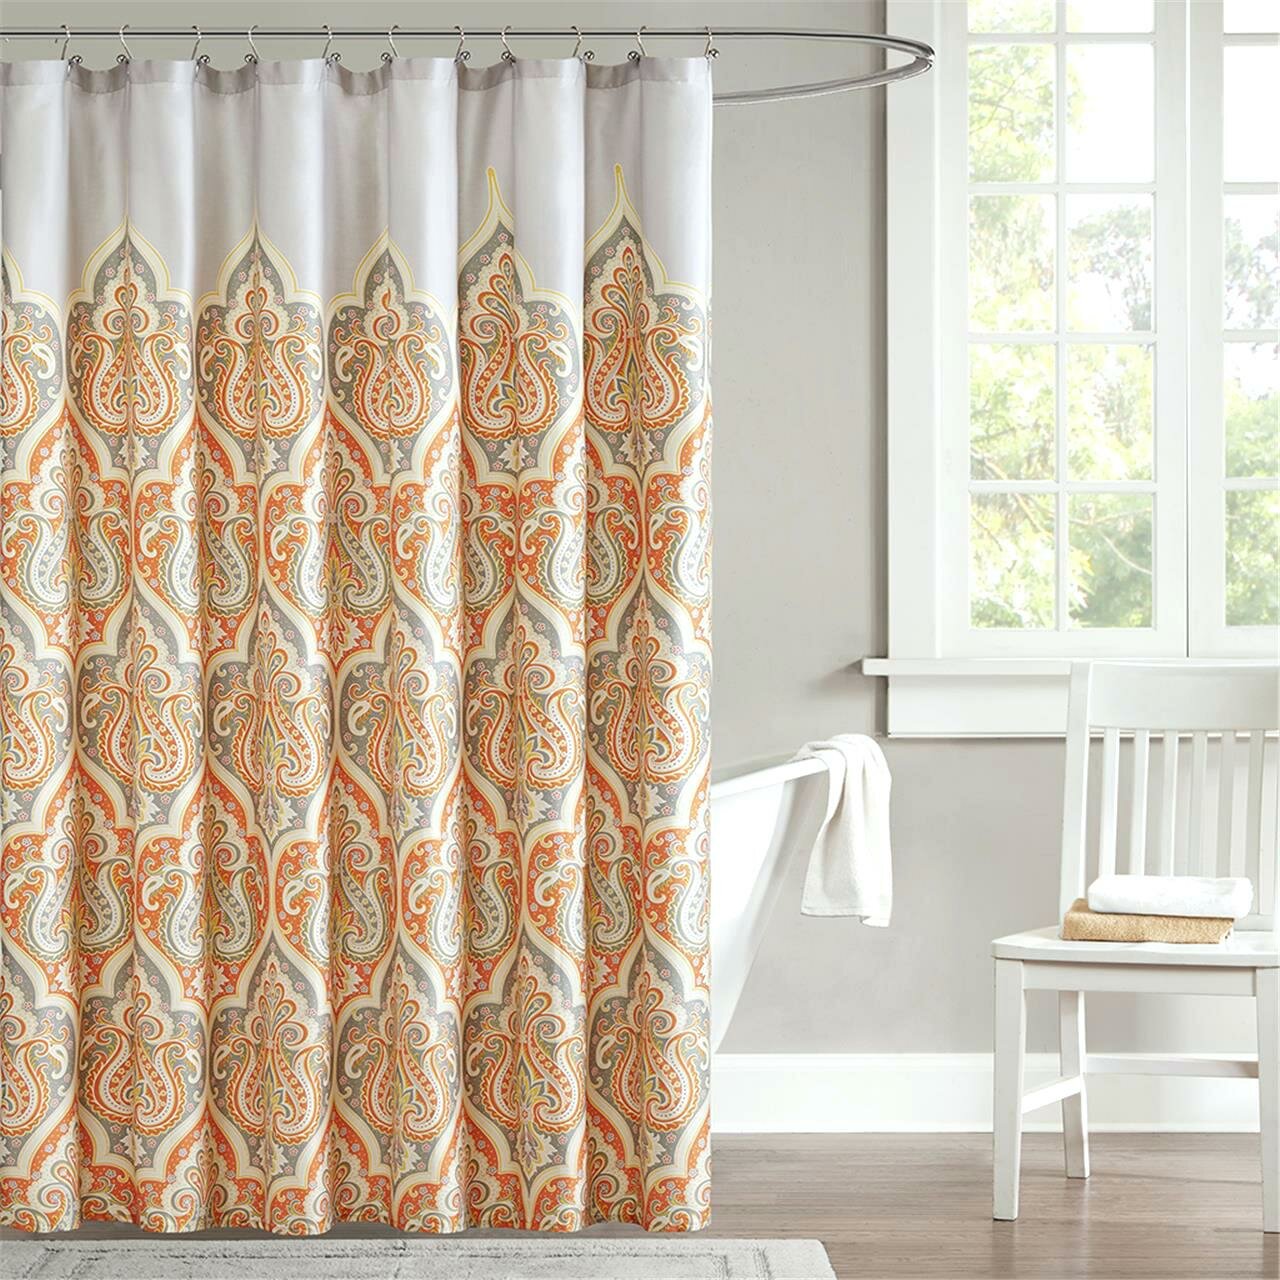 Mauve Shower Curtain | Ikea Shower Curtain | Extra Long Shower Curtain Liner 96